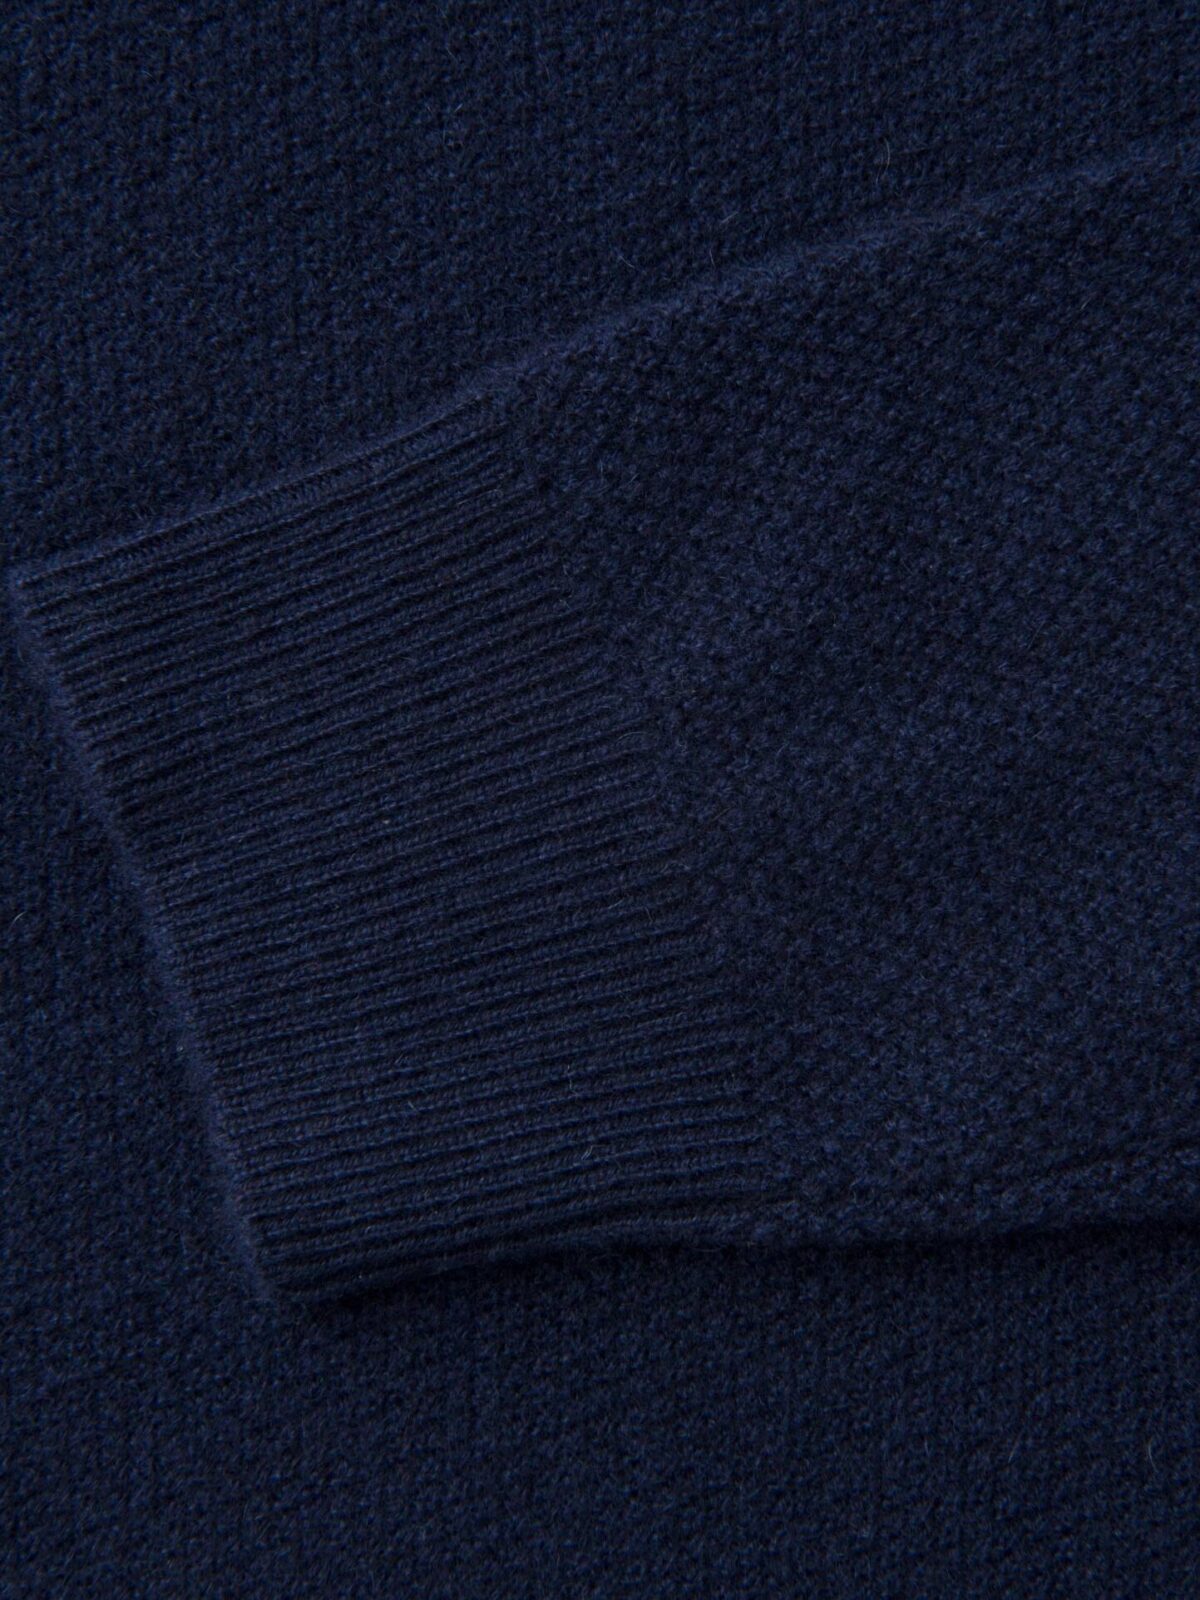 Navy Cobble Stitch Cashmere Crewneck Sweater